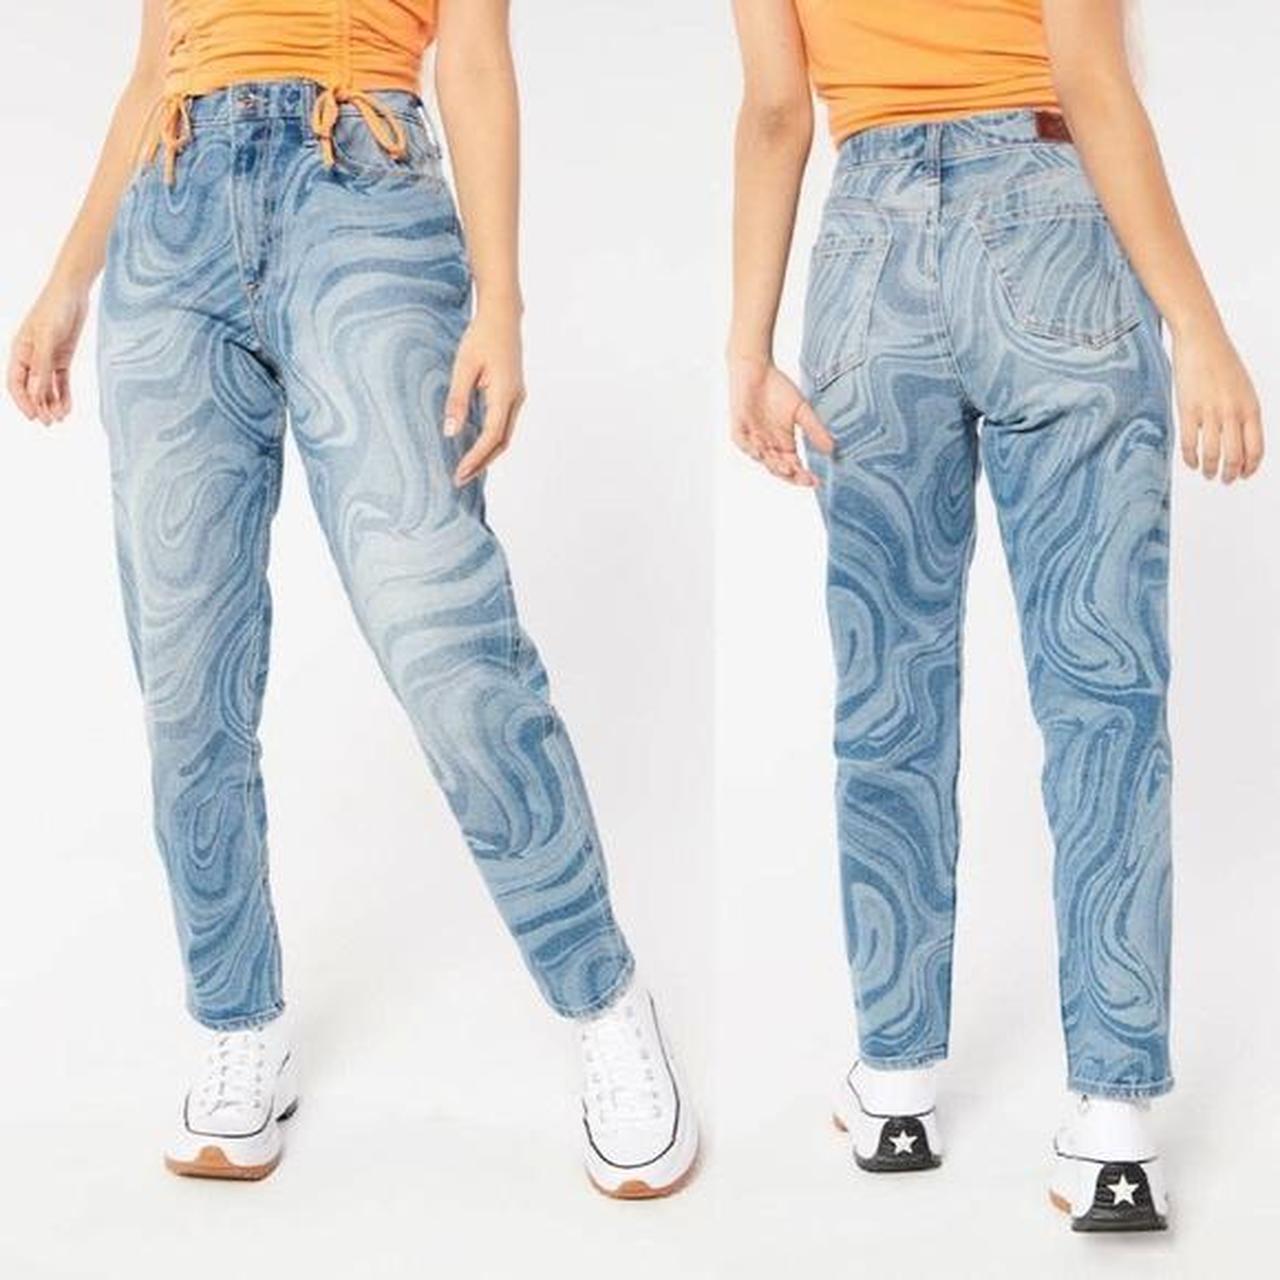 Hollister Jeans •swirl pattern •curvy high-rise - Depop